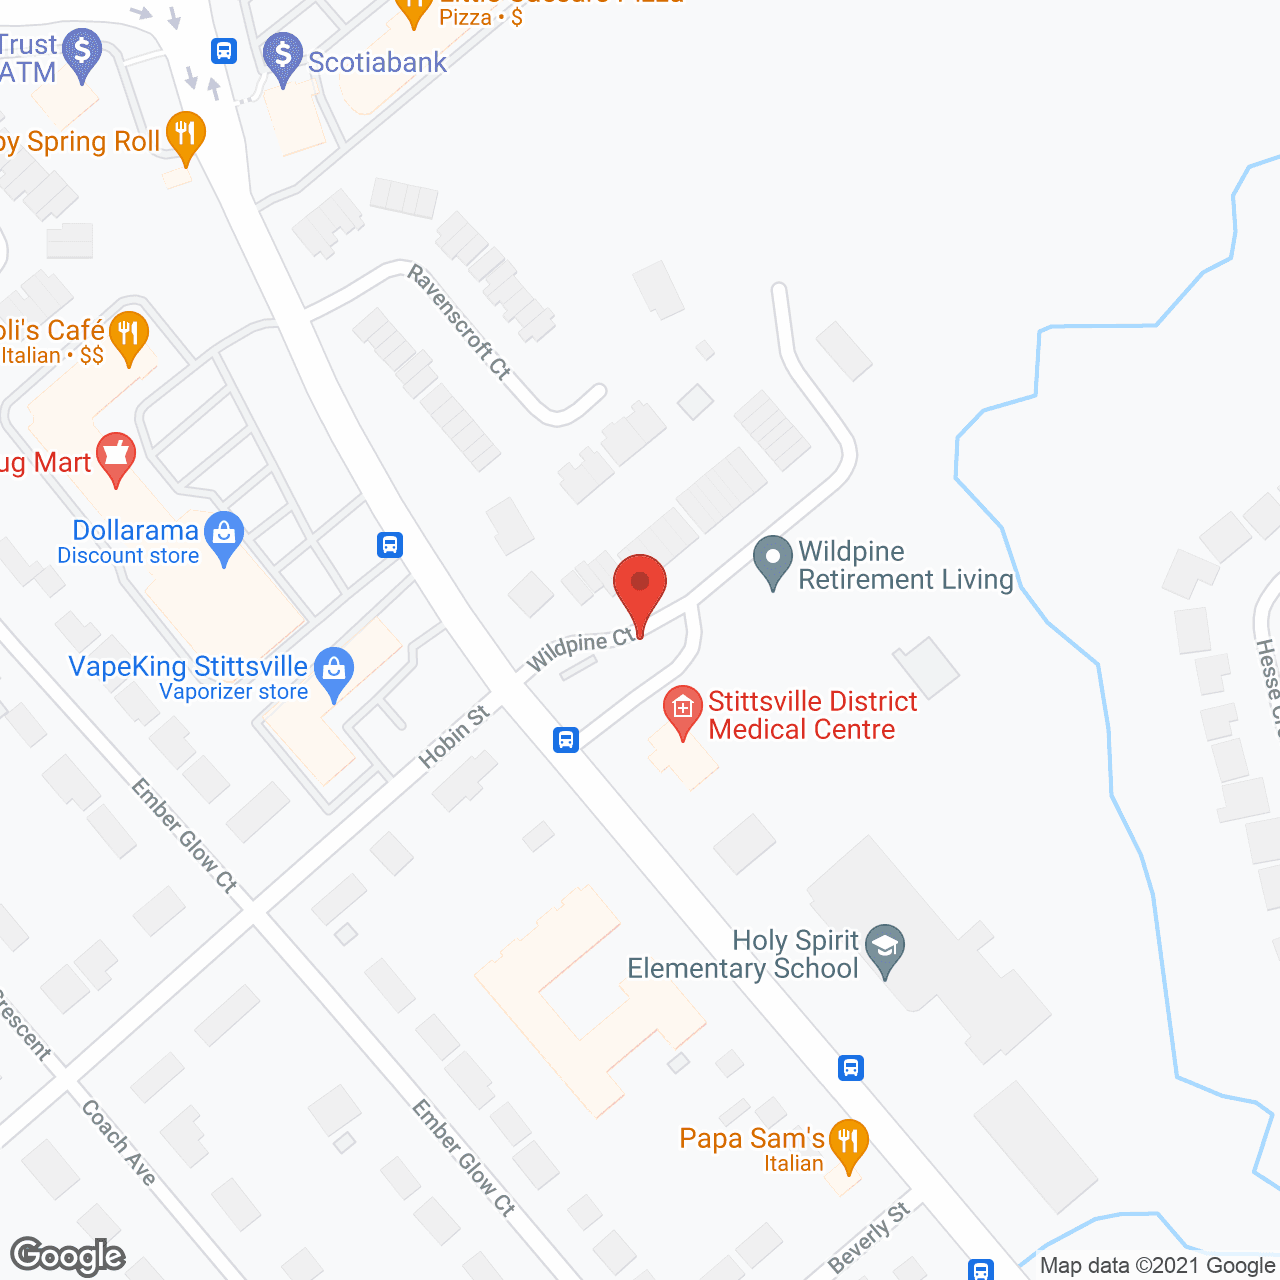 Wildpine Residence in google map